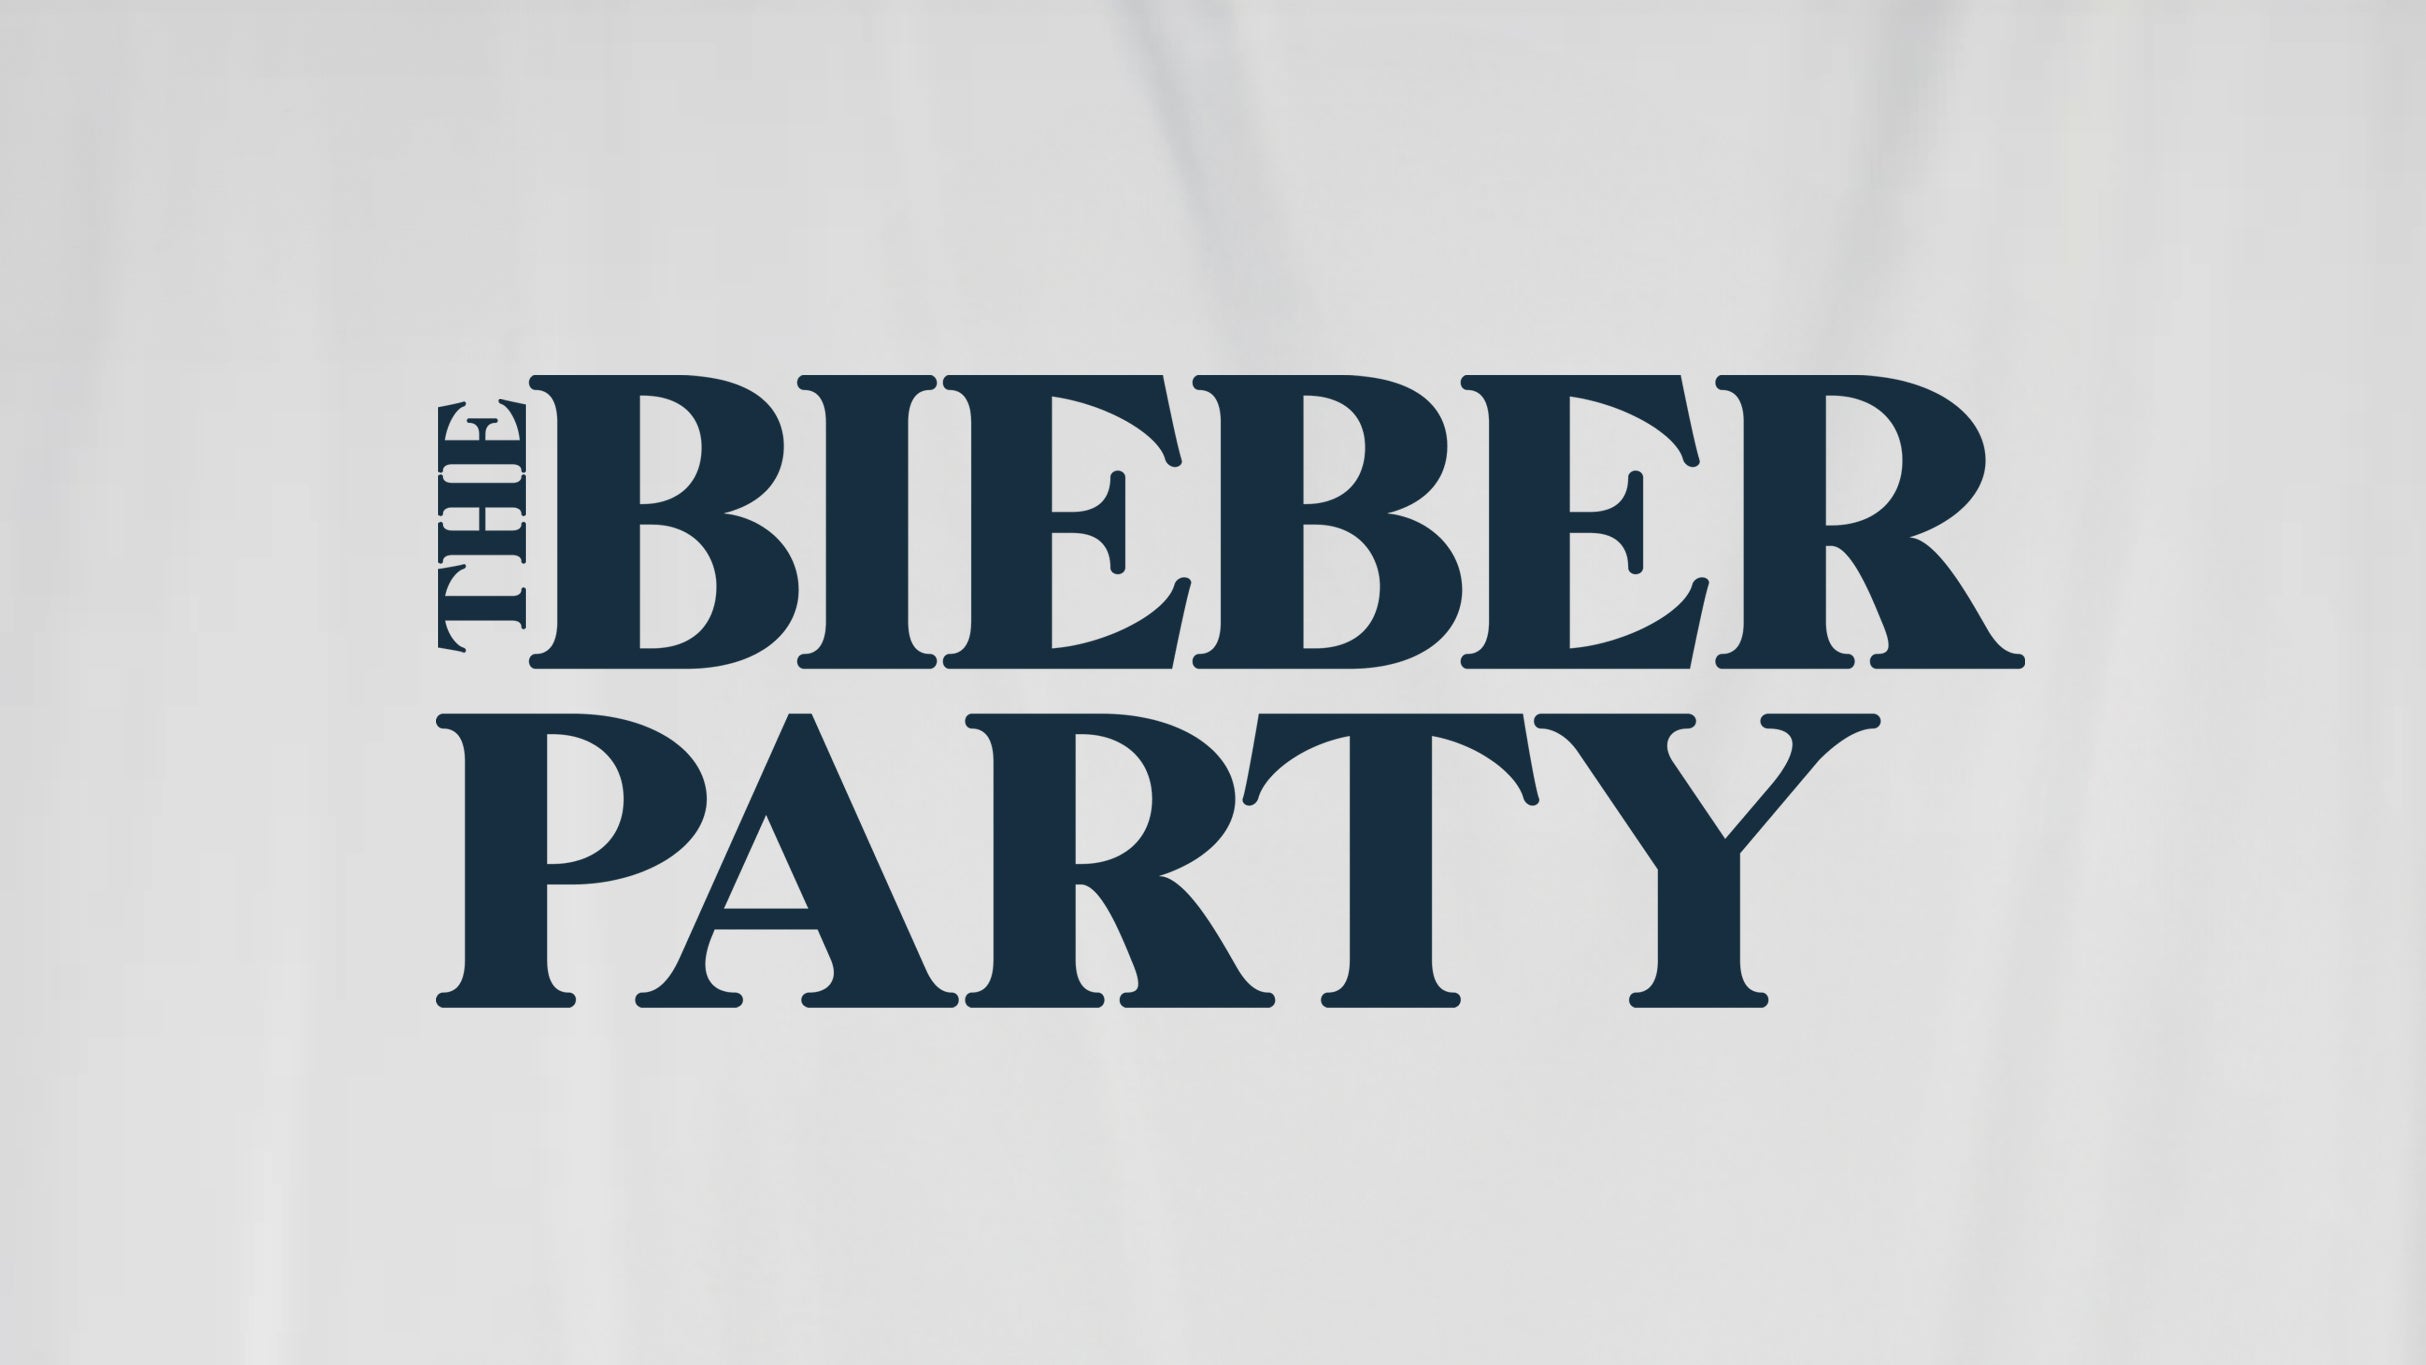 The Bieber Party: Justin Bieber Night (18+)